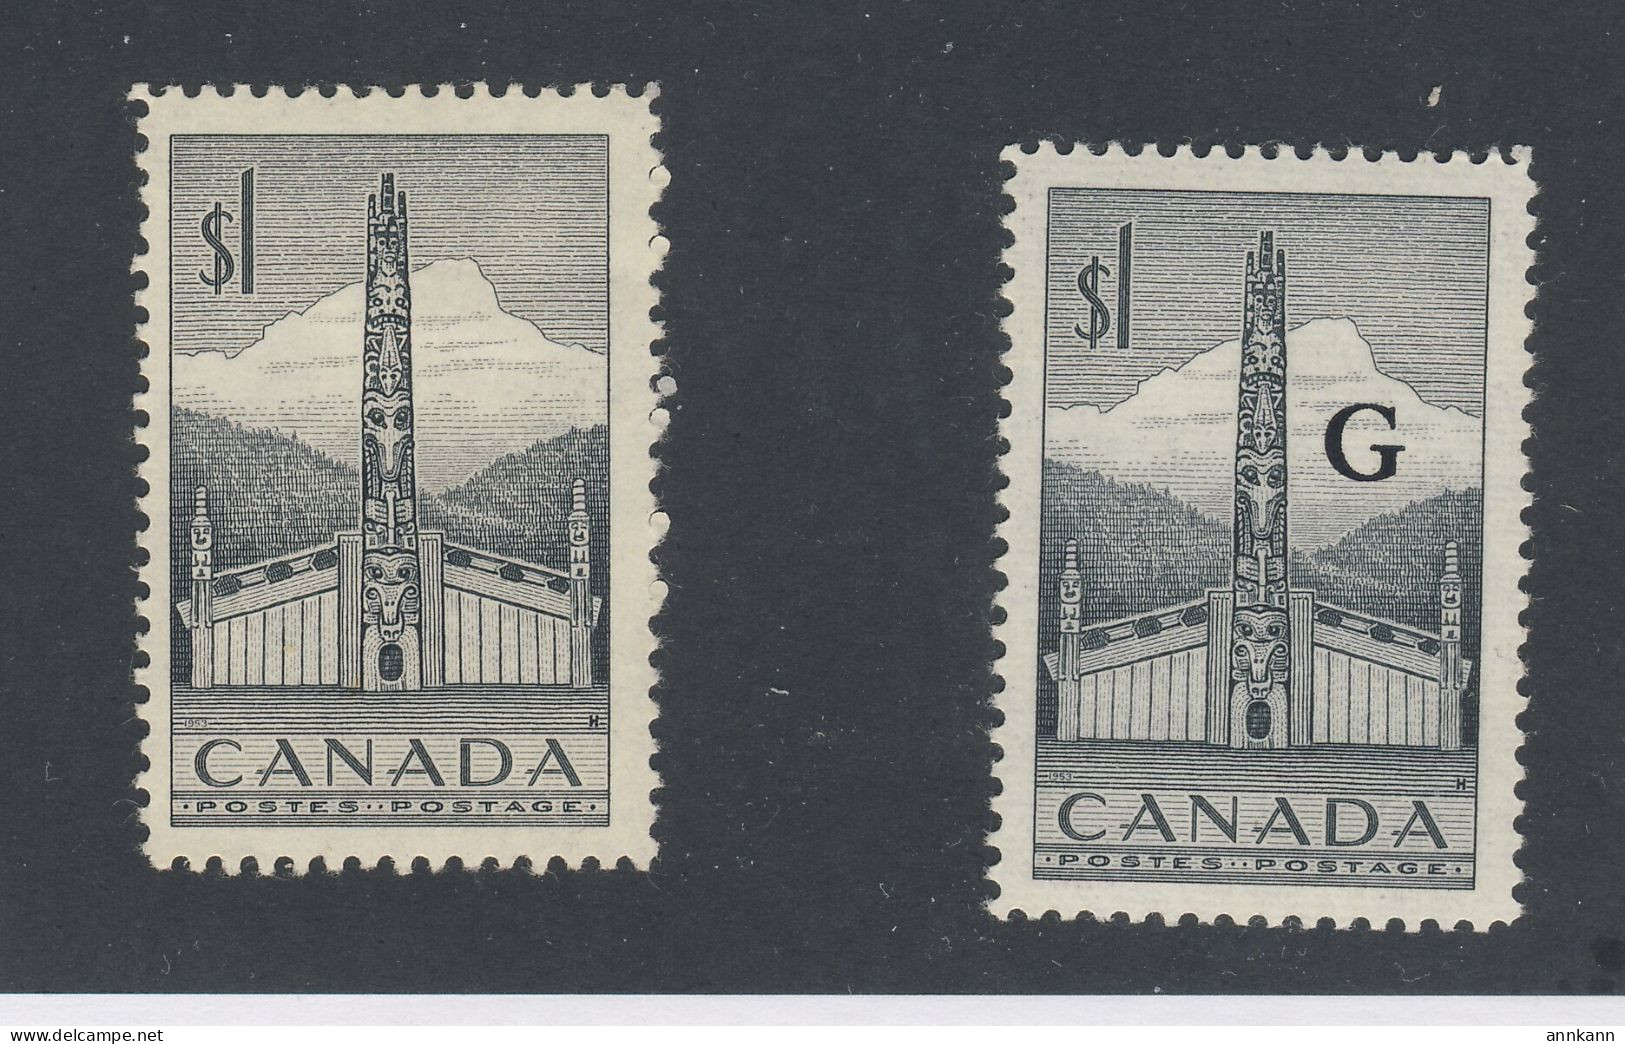 2x Canada MH Stamps #321 -$1.00 Totem & #032 -$1.00 Totem "G" GV = $17.00 - Surchargés